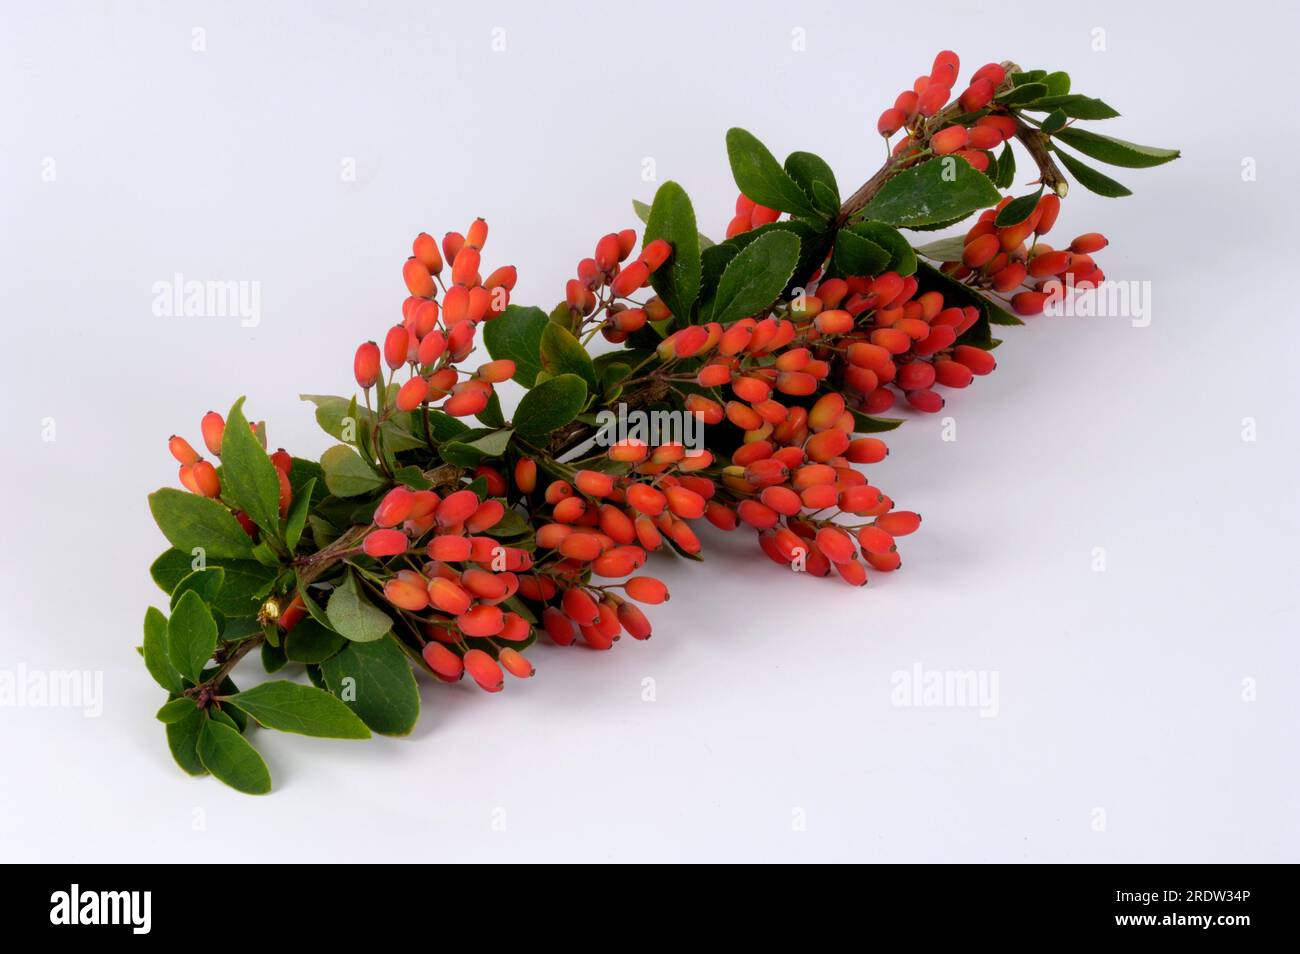 Frutti di bosco, spina acida, bacca di aceto (Berberis vulgaris), tridentina, piante di spina acida (Berberidaceae) Foto Stock